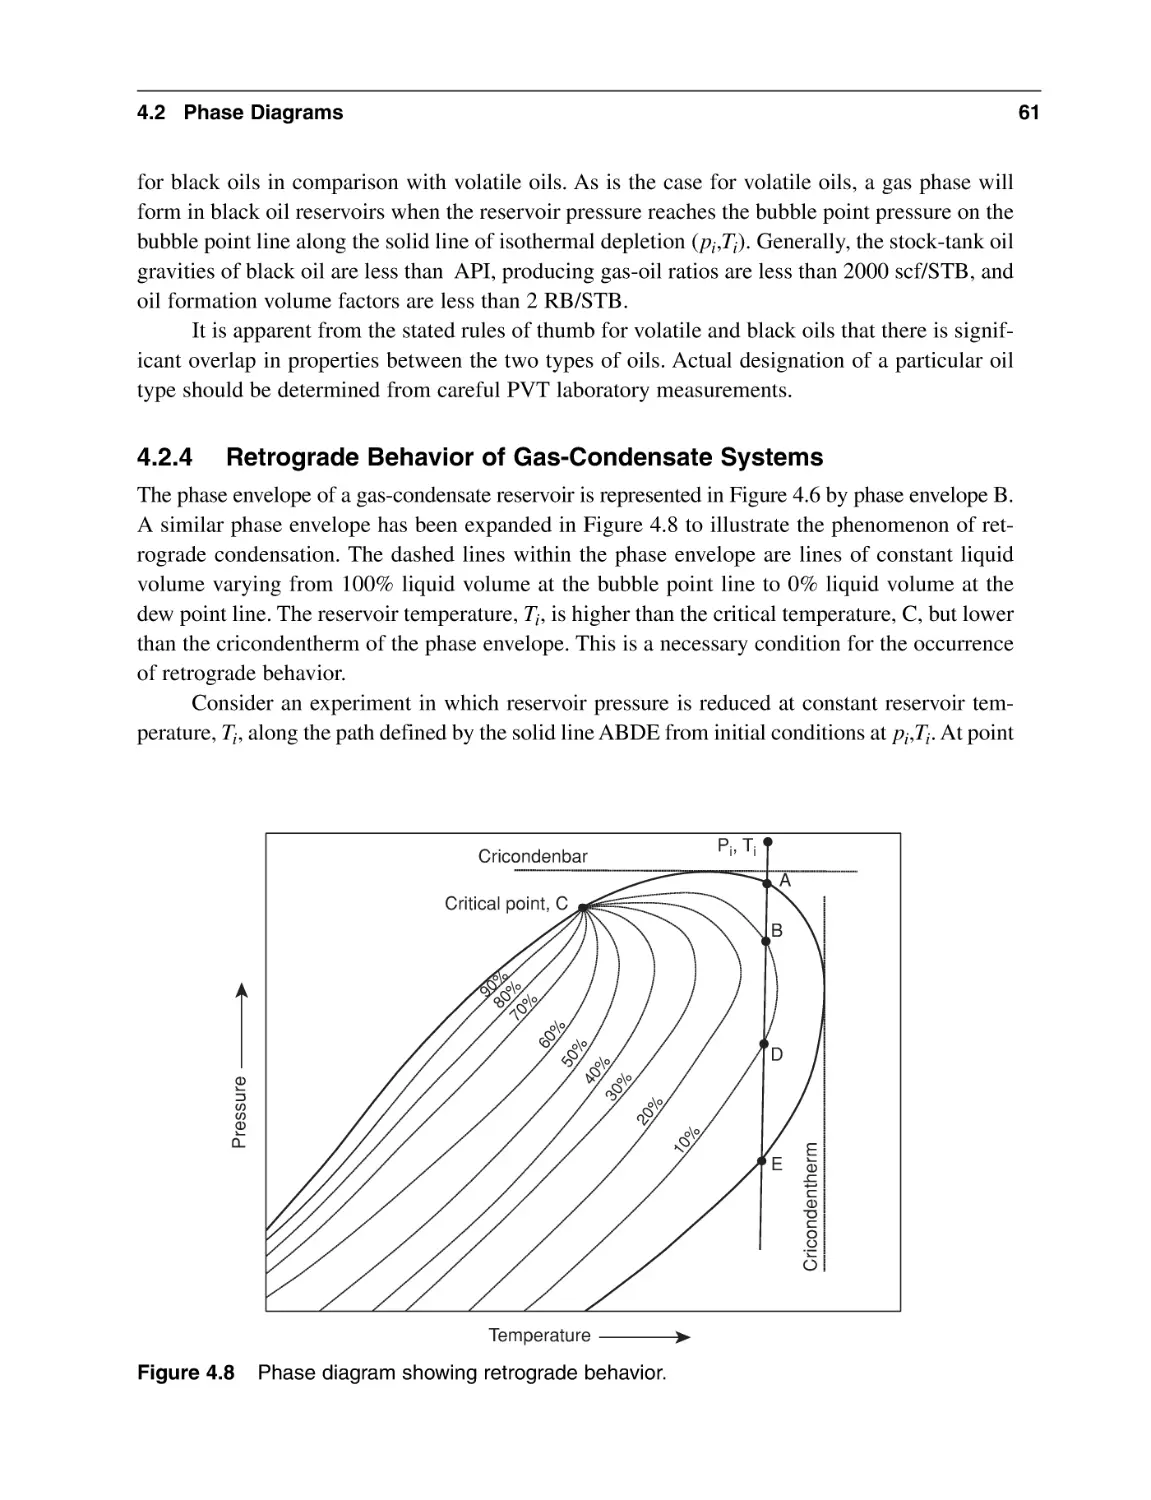 4.2.4 Retrograde Behavior of Gas-Condensate Systems